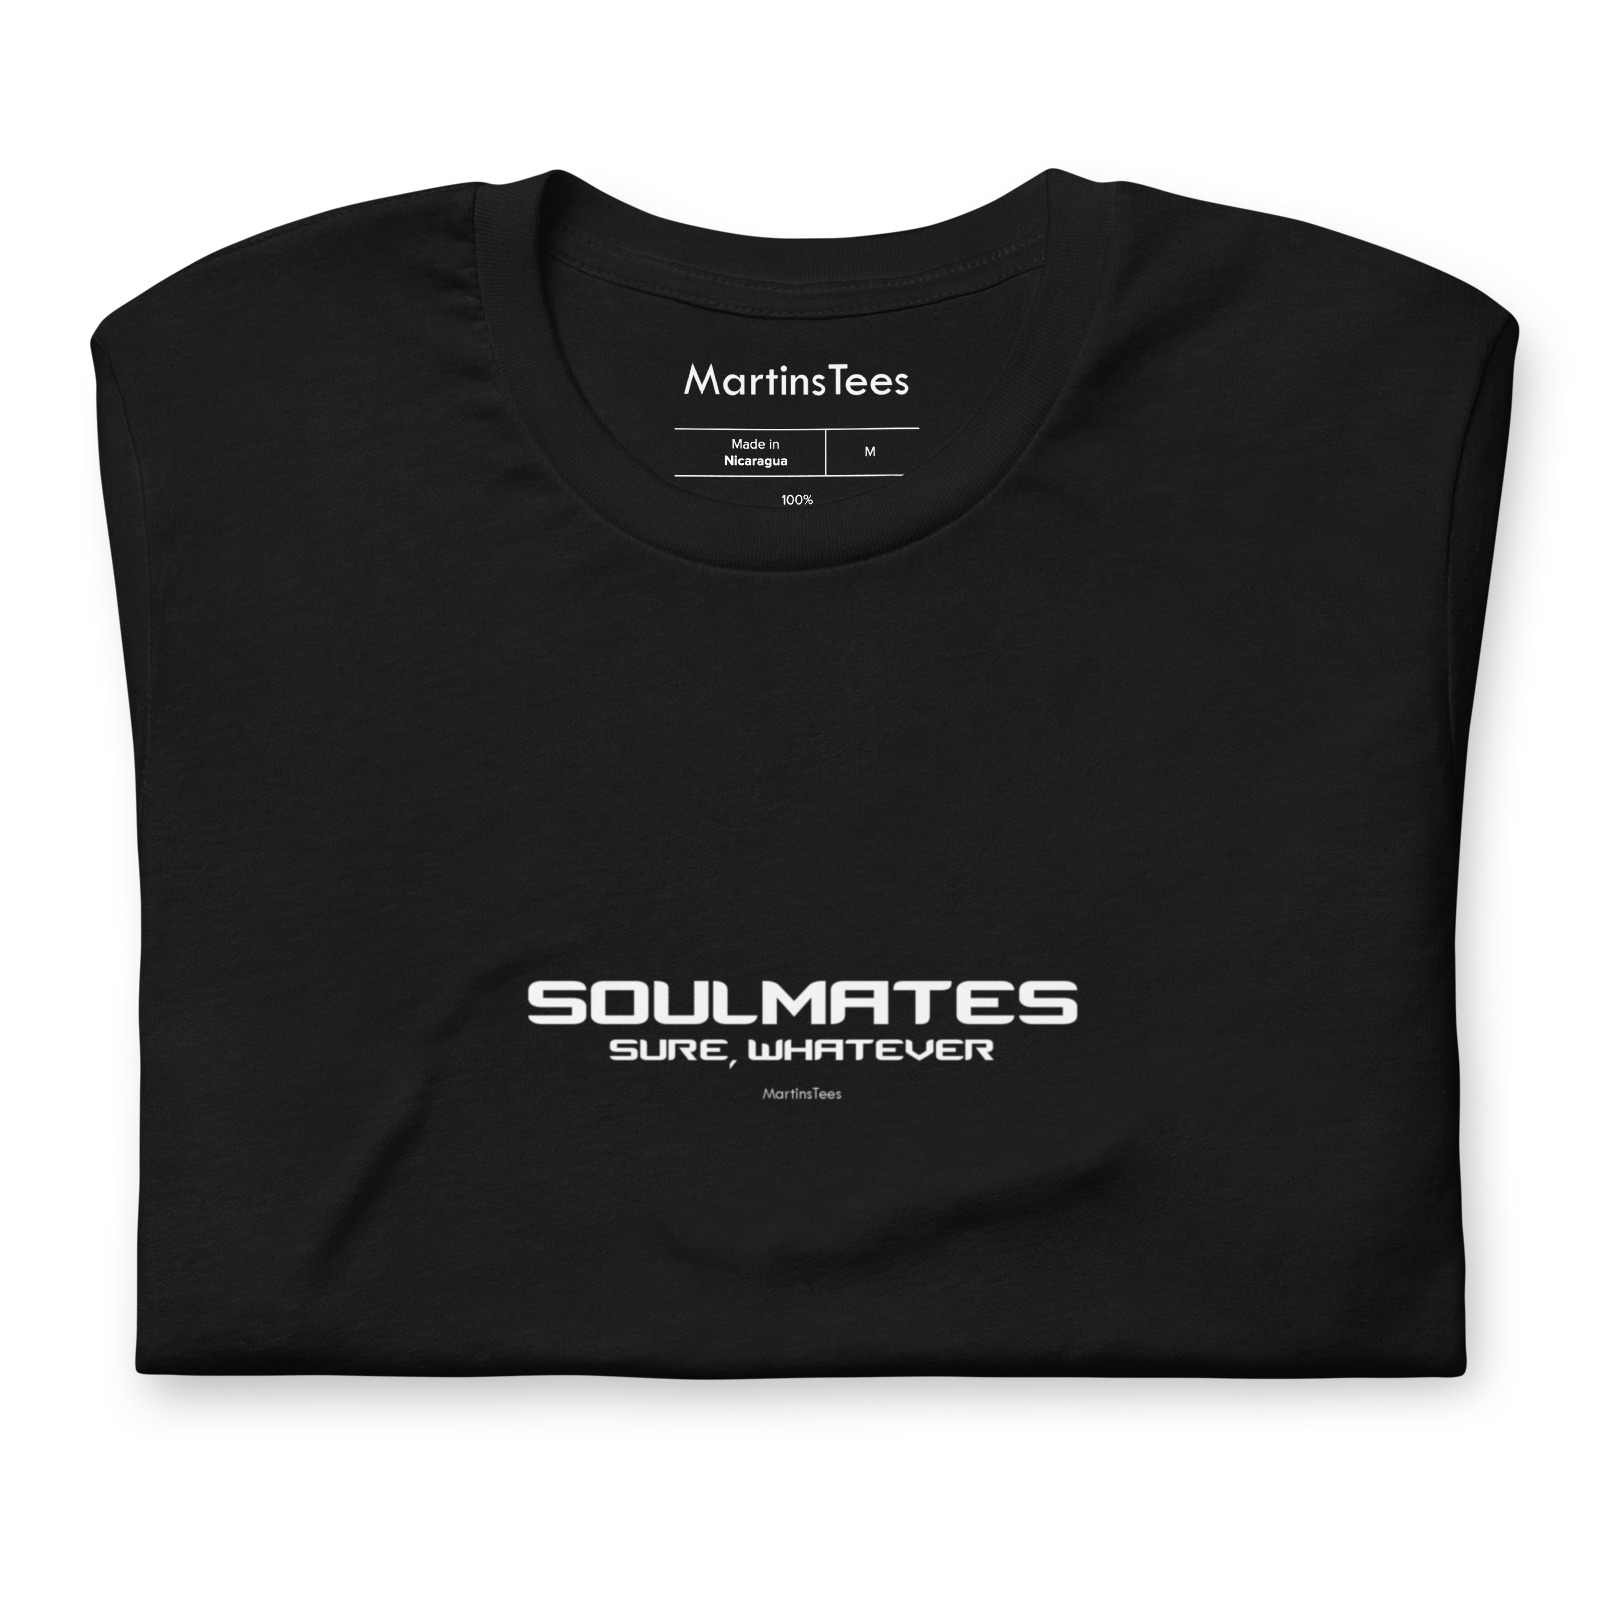 T-shirt: SOULMATES - SURE, WHATEVER